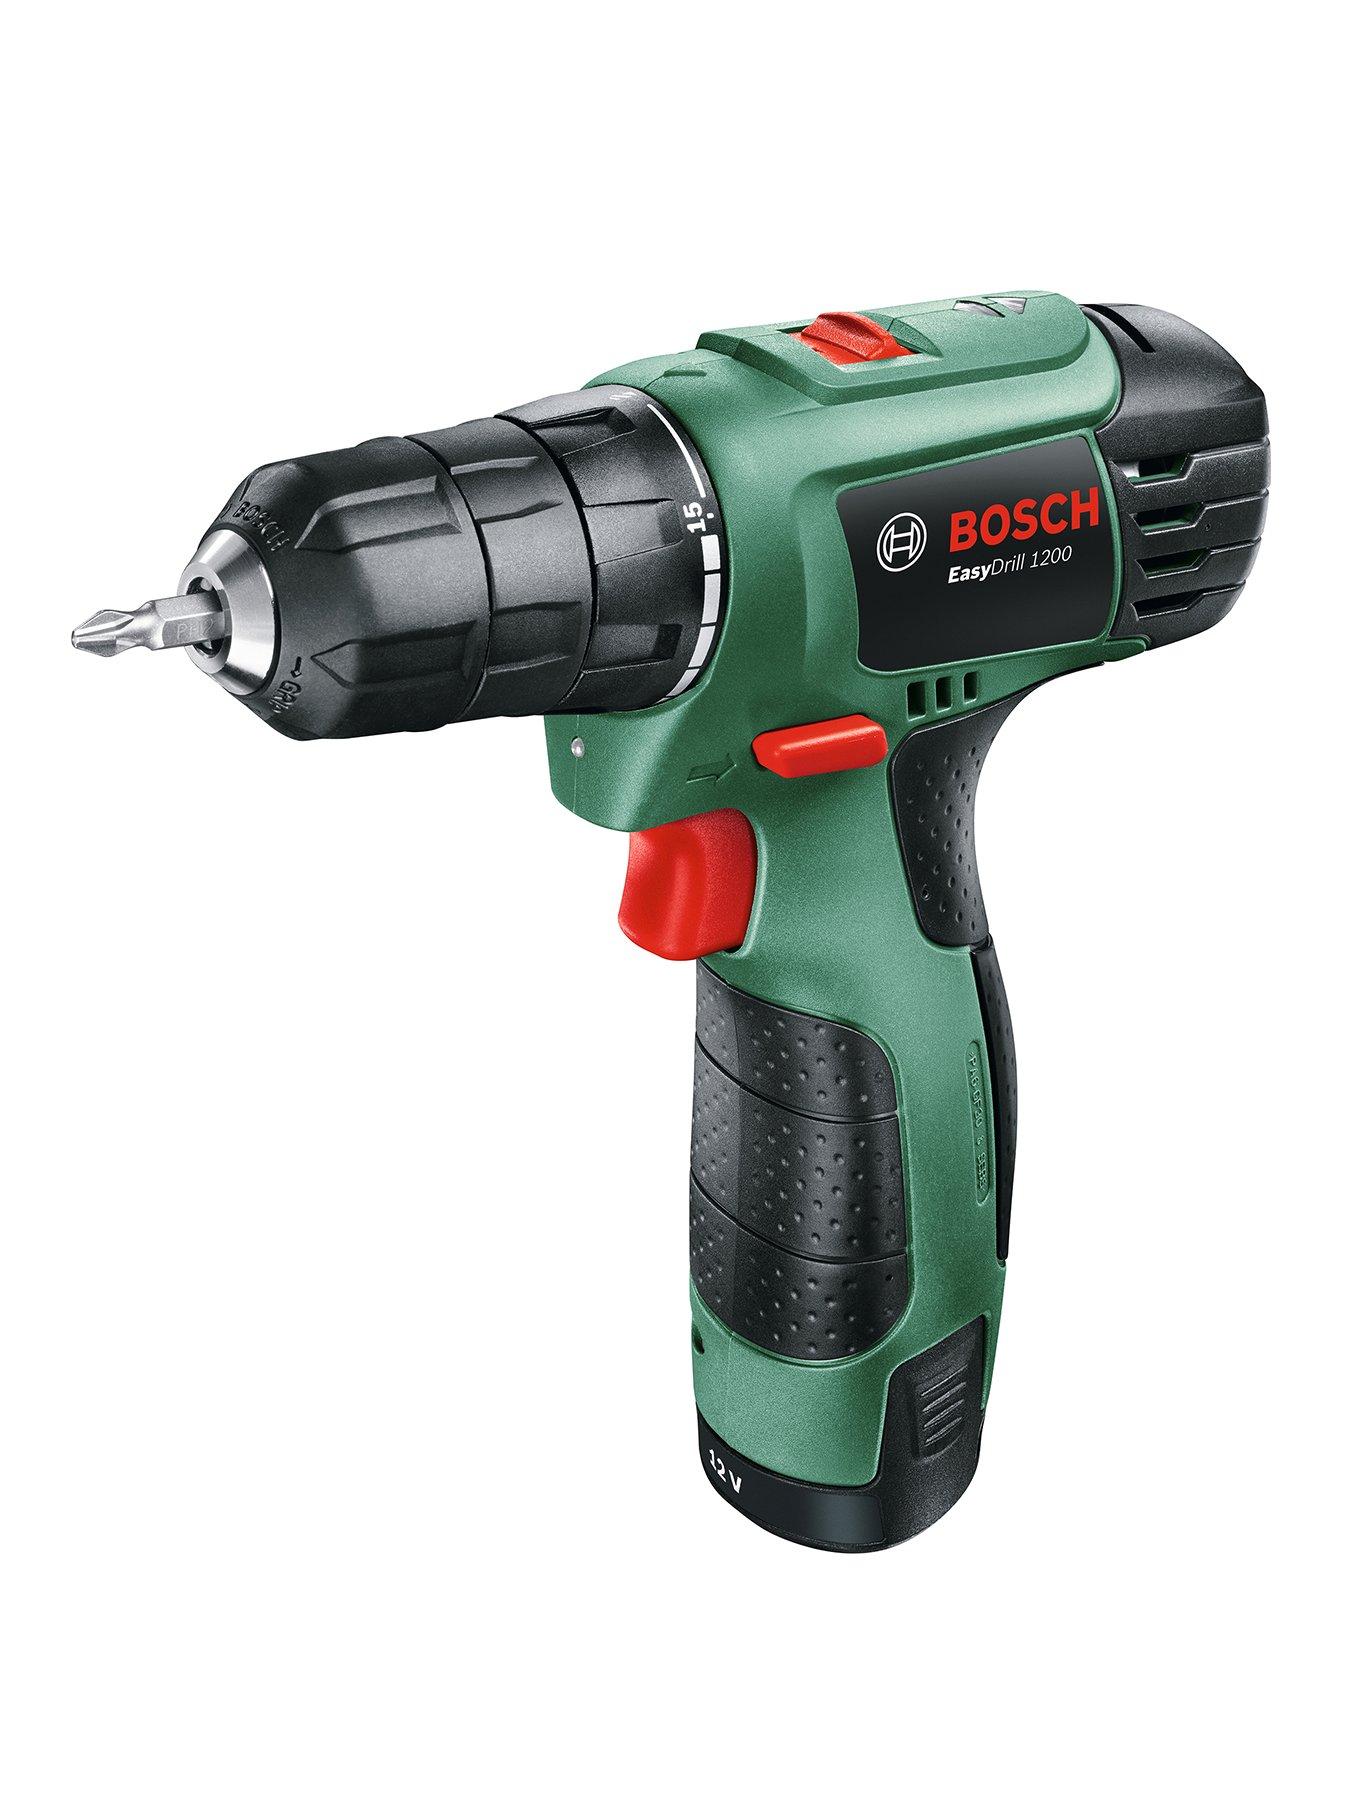 Drills Bosch Power Tools Diy Equipment Home Garden Www